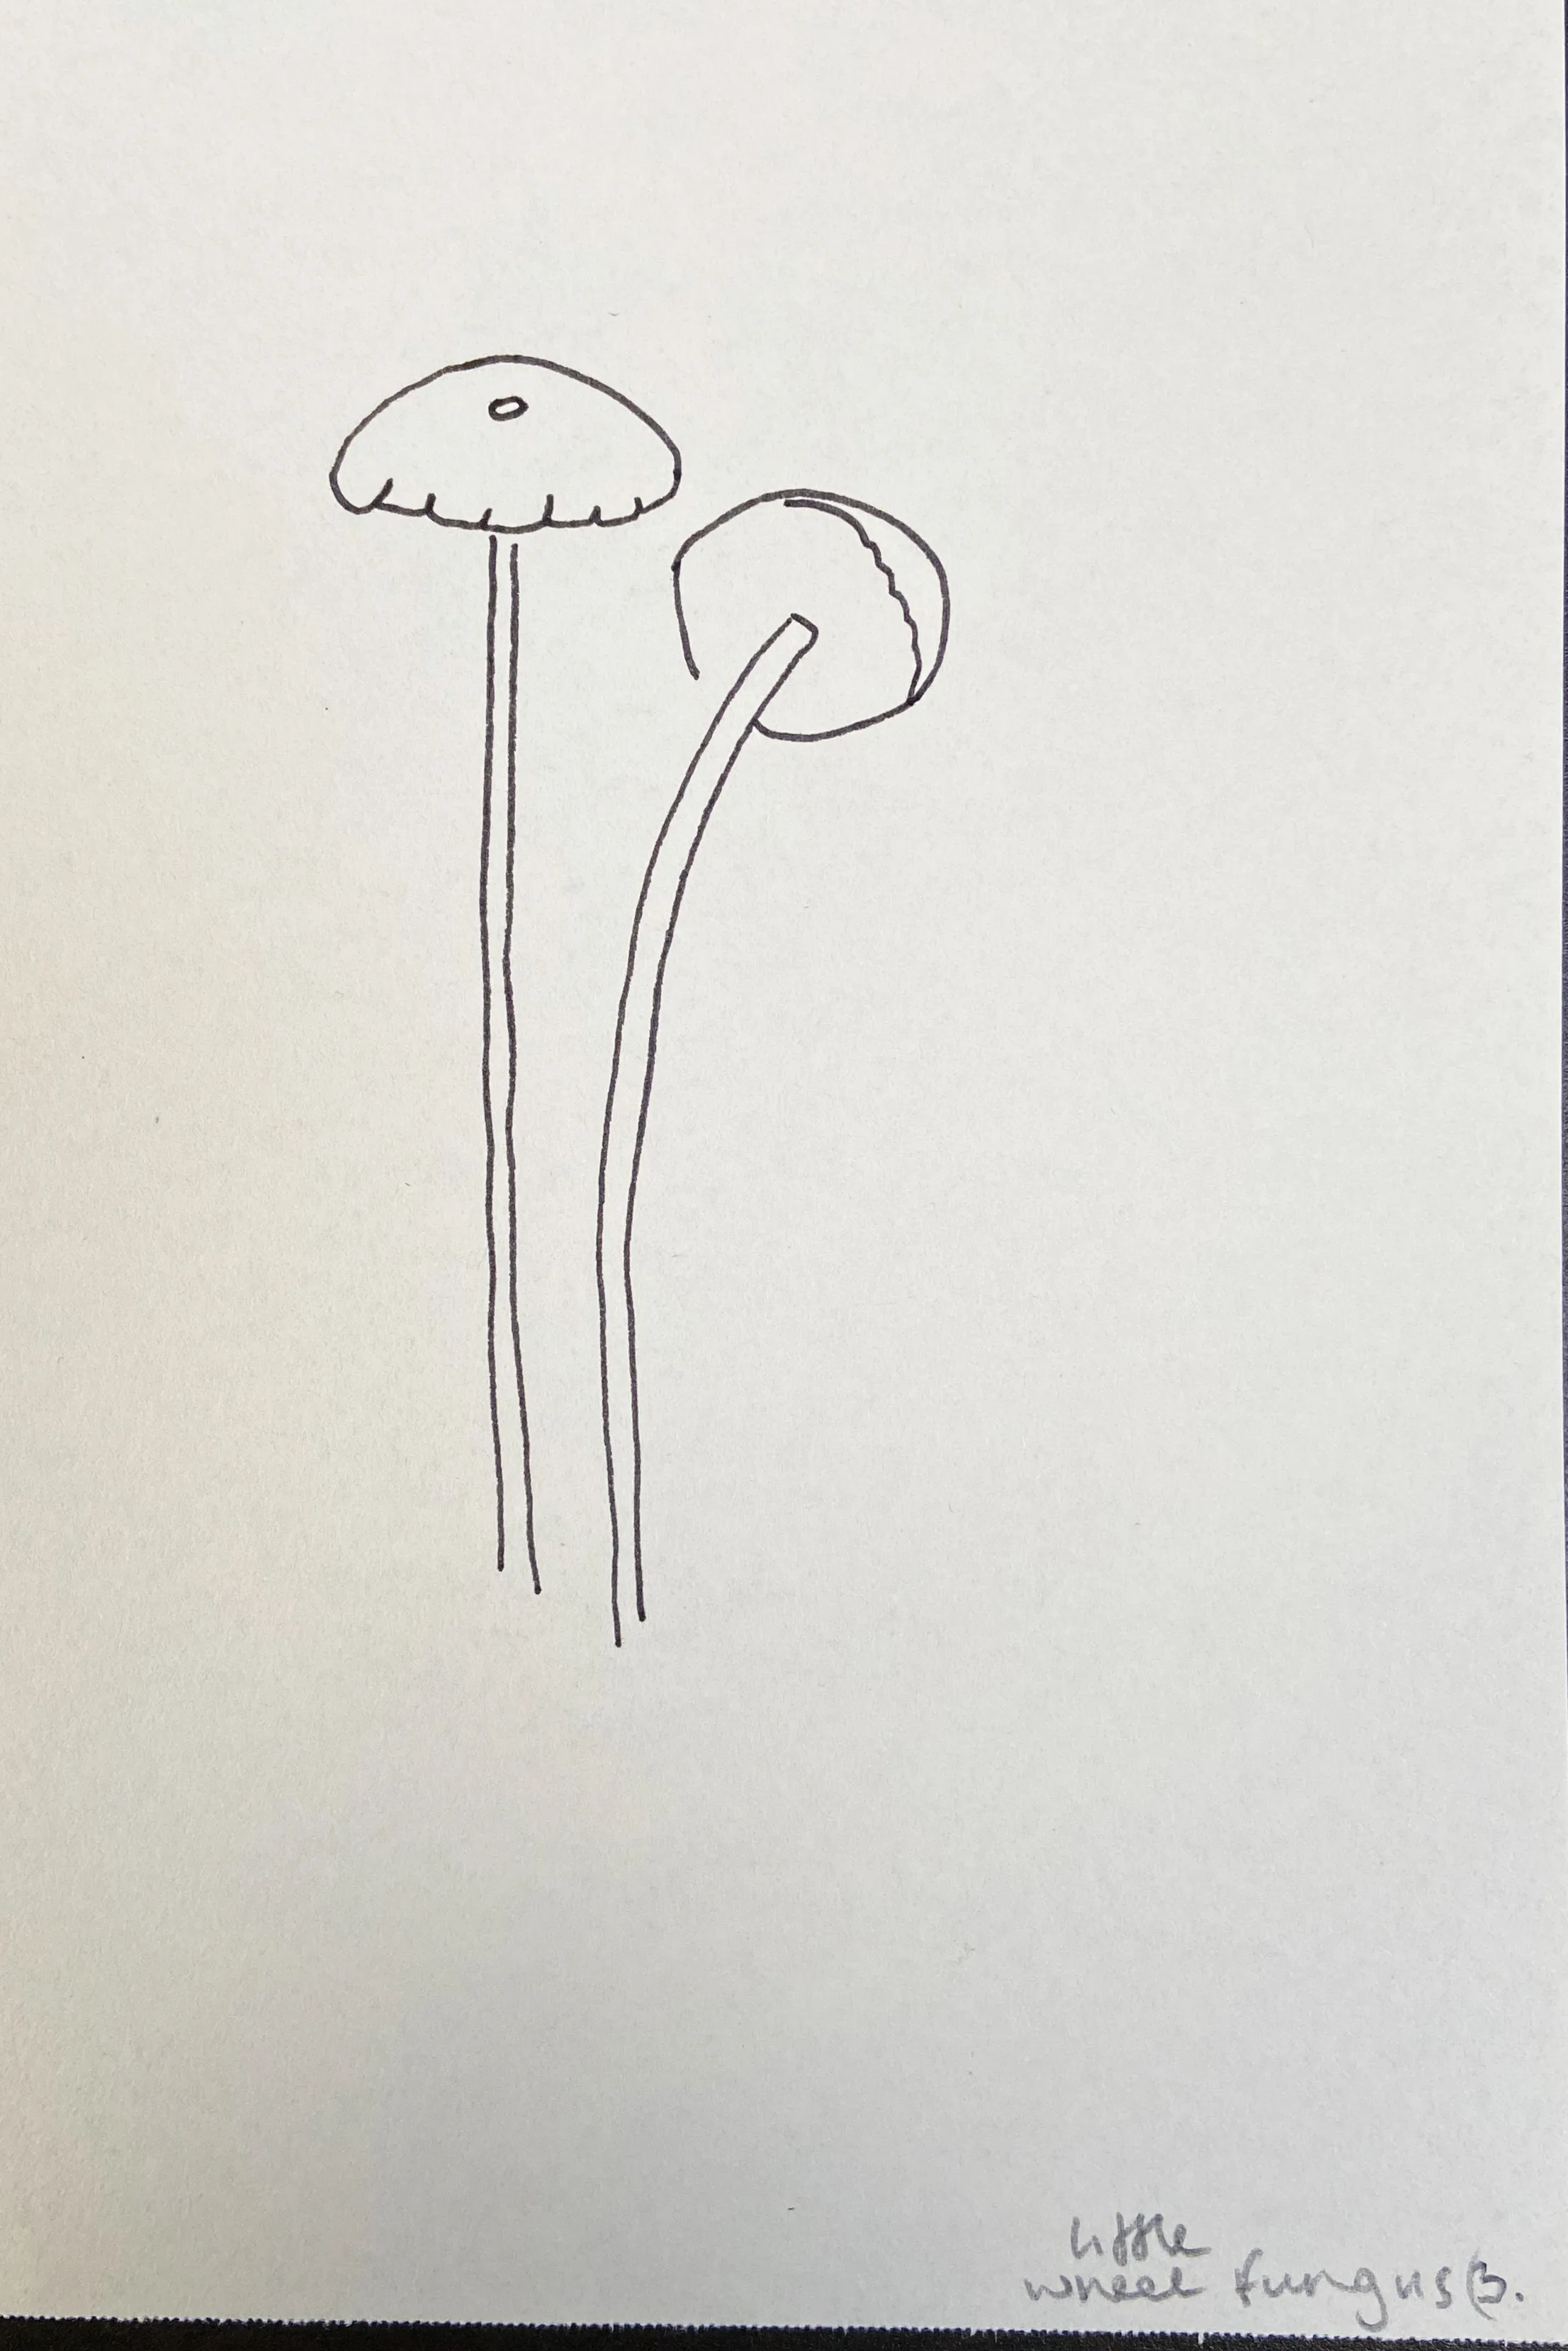 Little wheel fungus drawing step 3